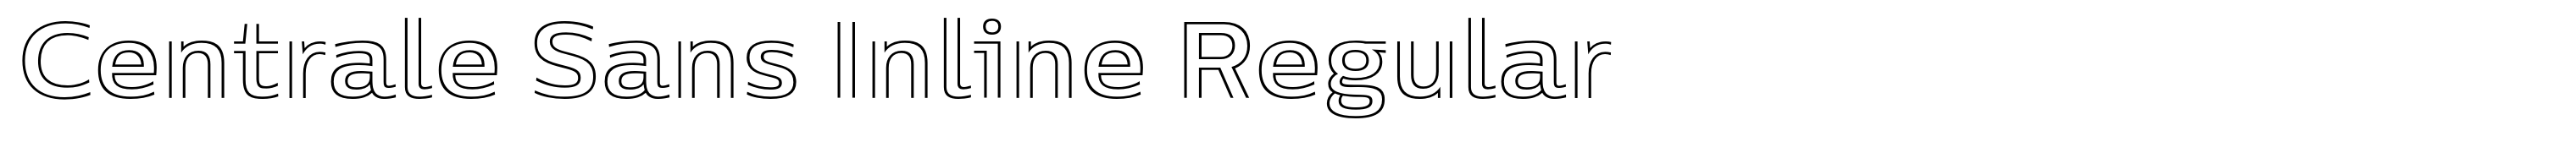 Centrale Sans Inline Regular